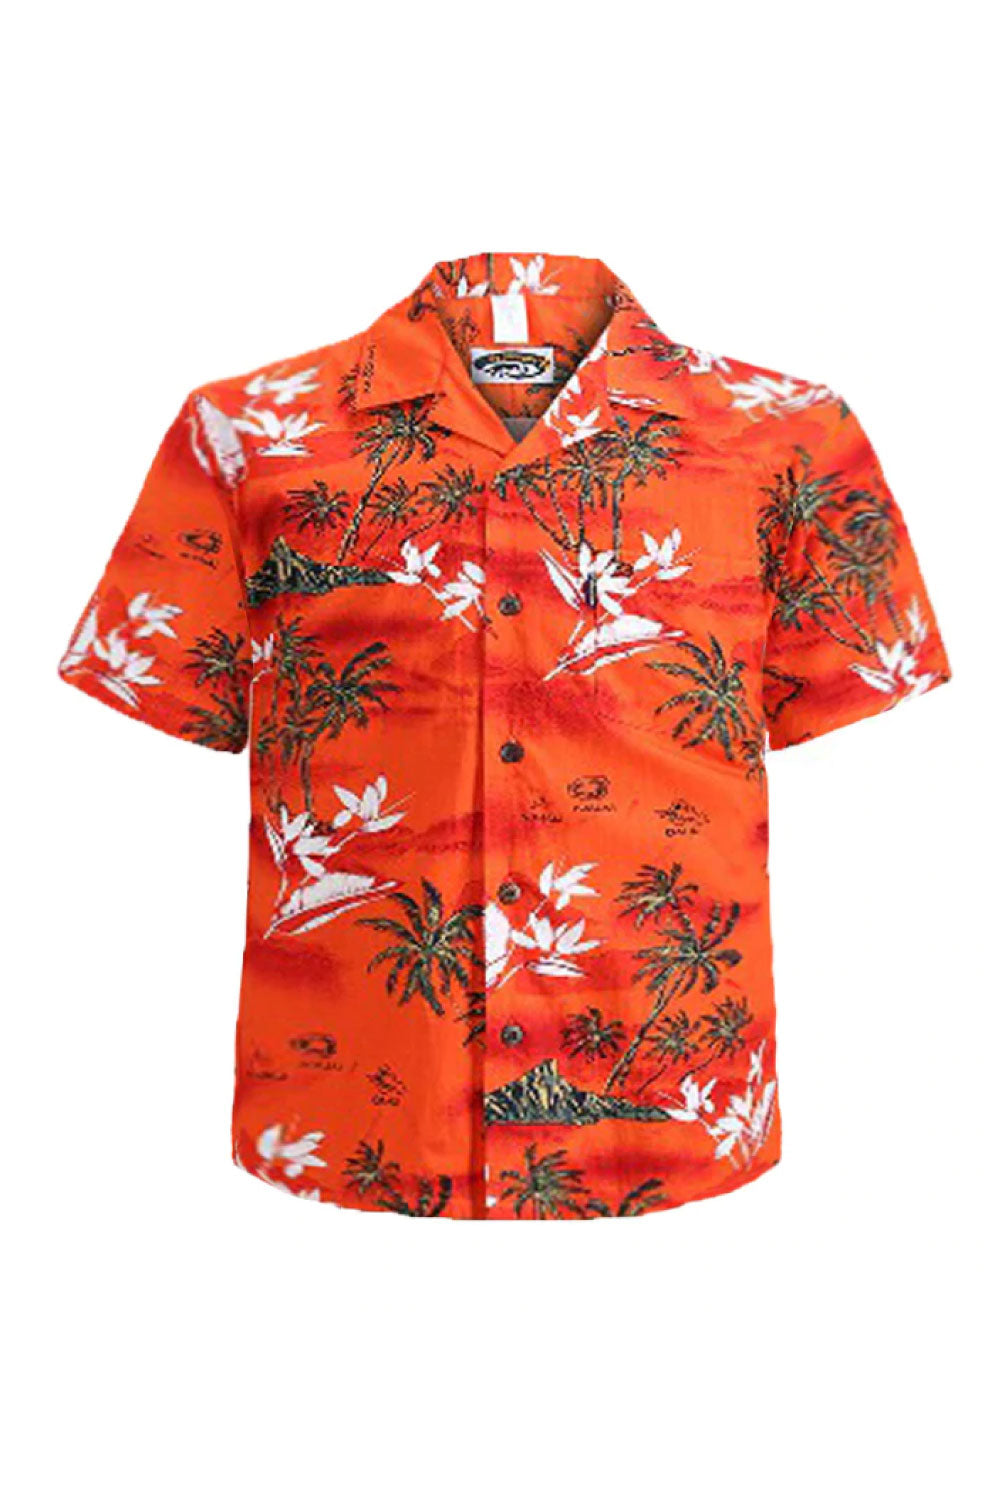 Image of Palmwave's Salmon Surf Aloha Men's Shirt.